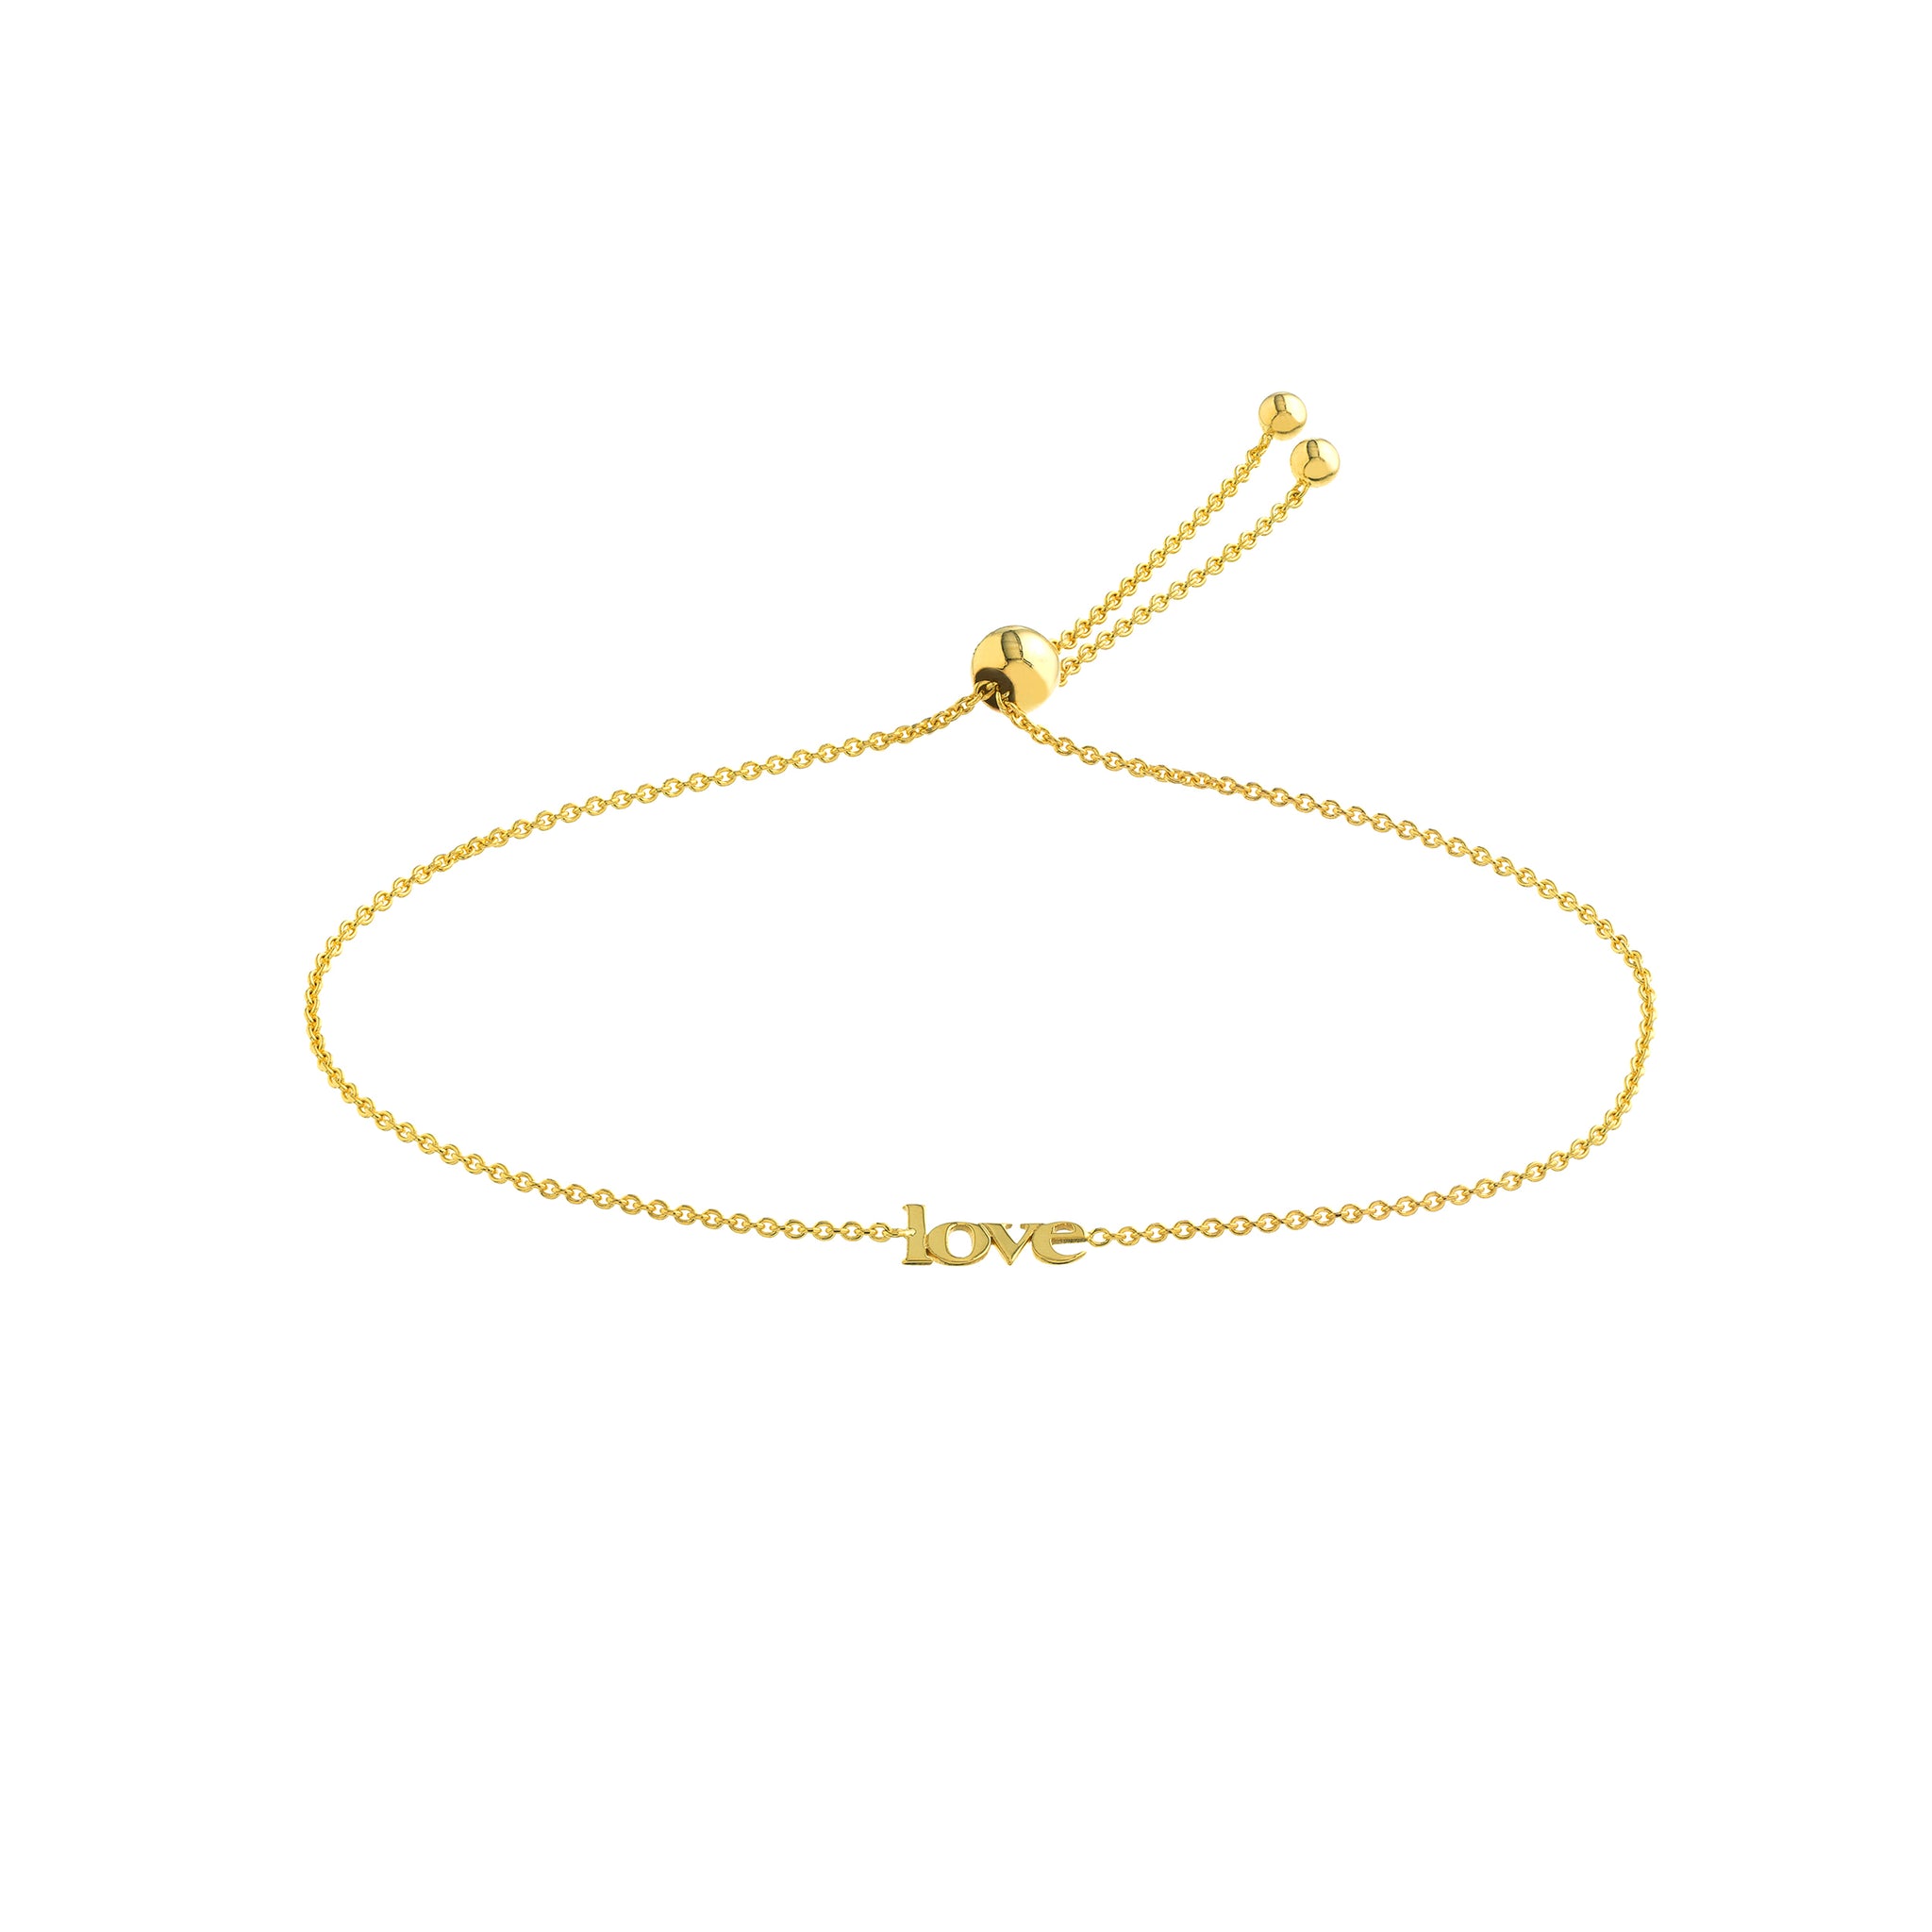 Bracelet Love Bolo en or jaune 14K de la collection Hemsleys